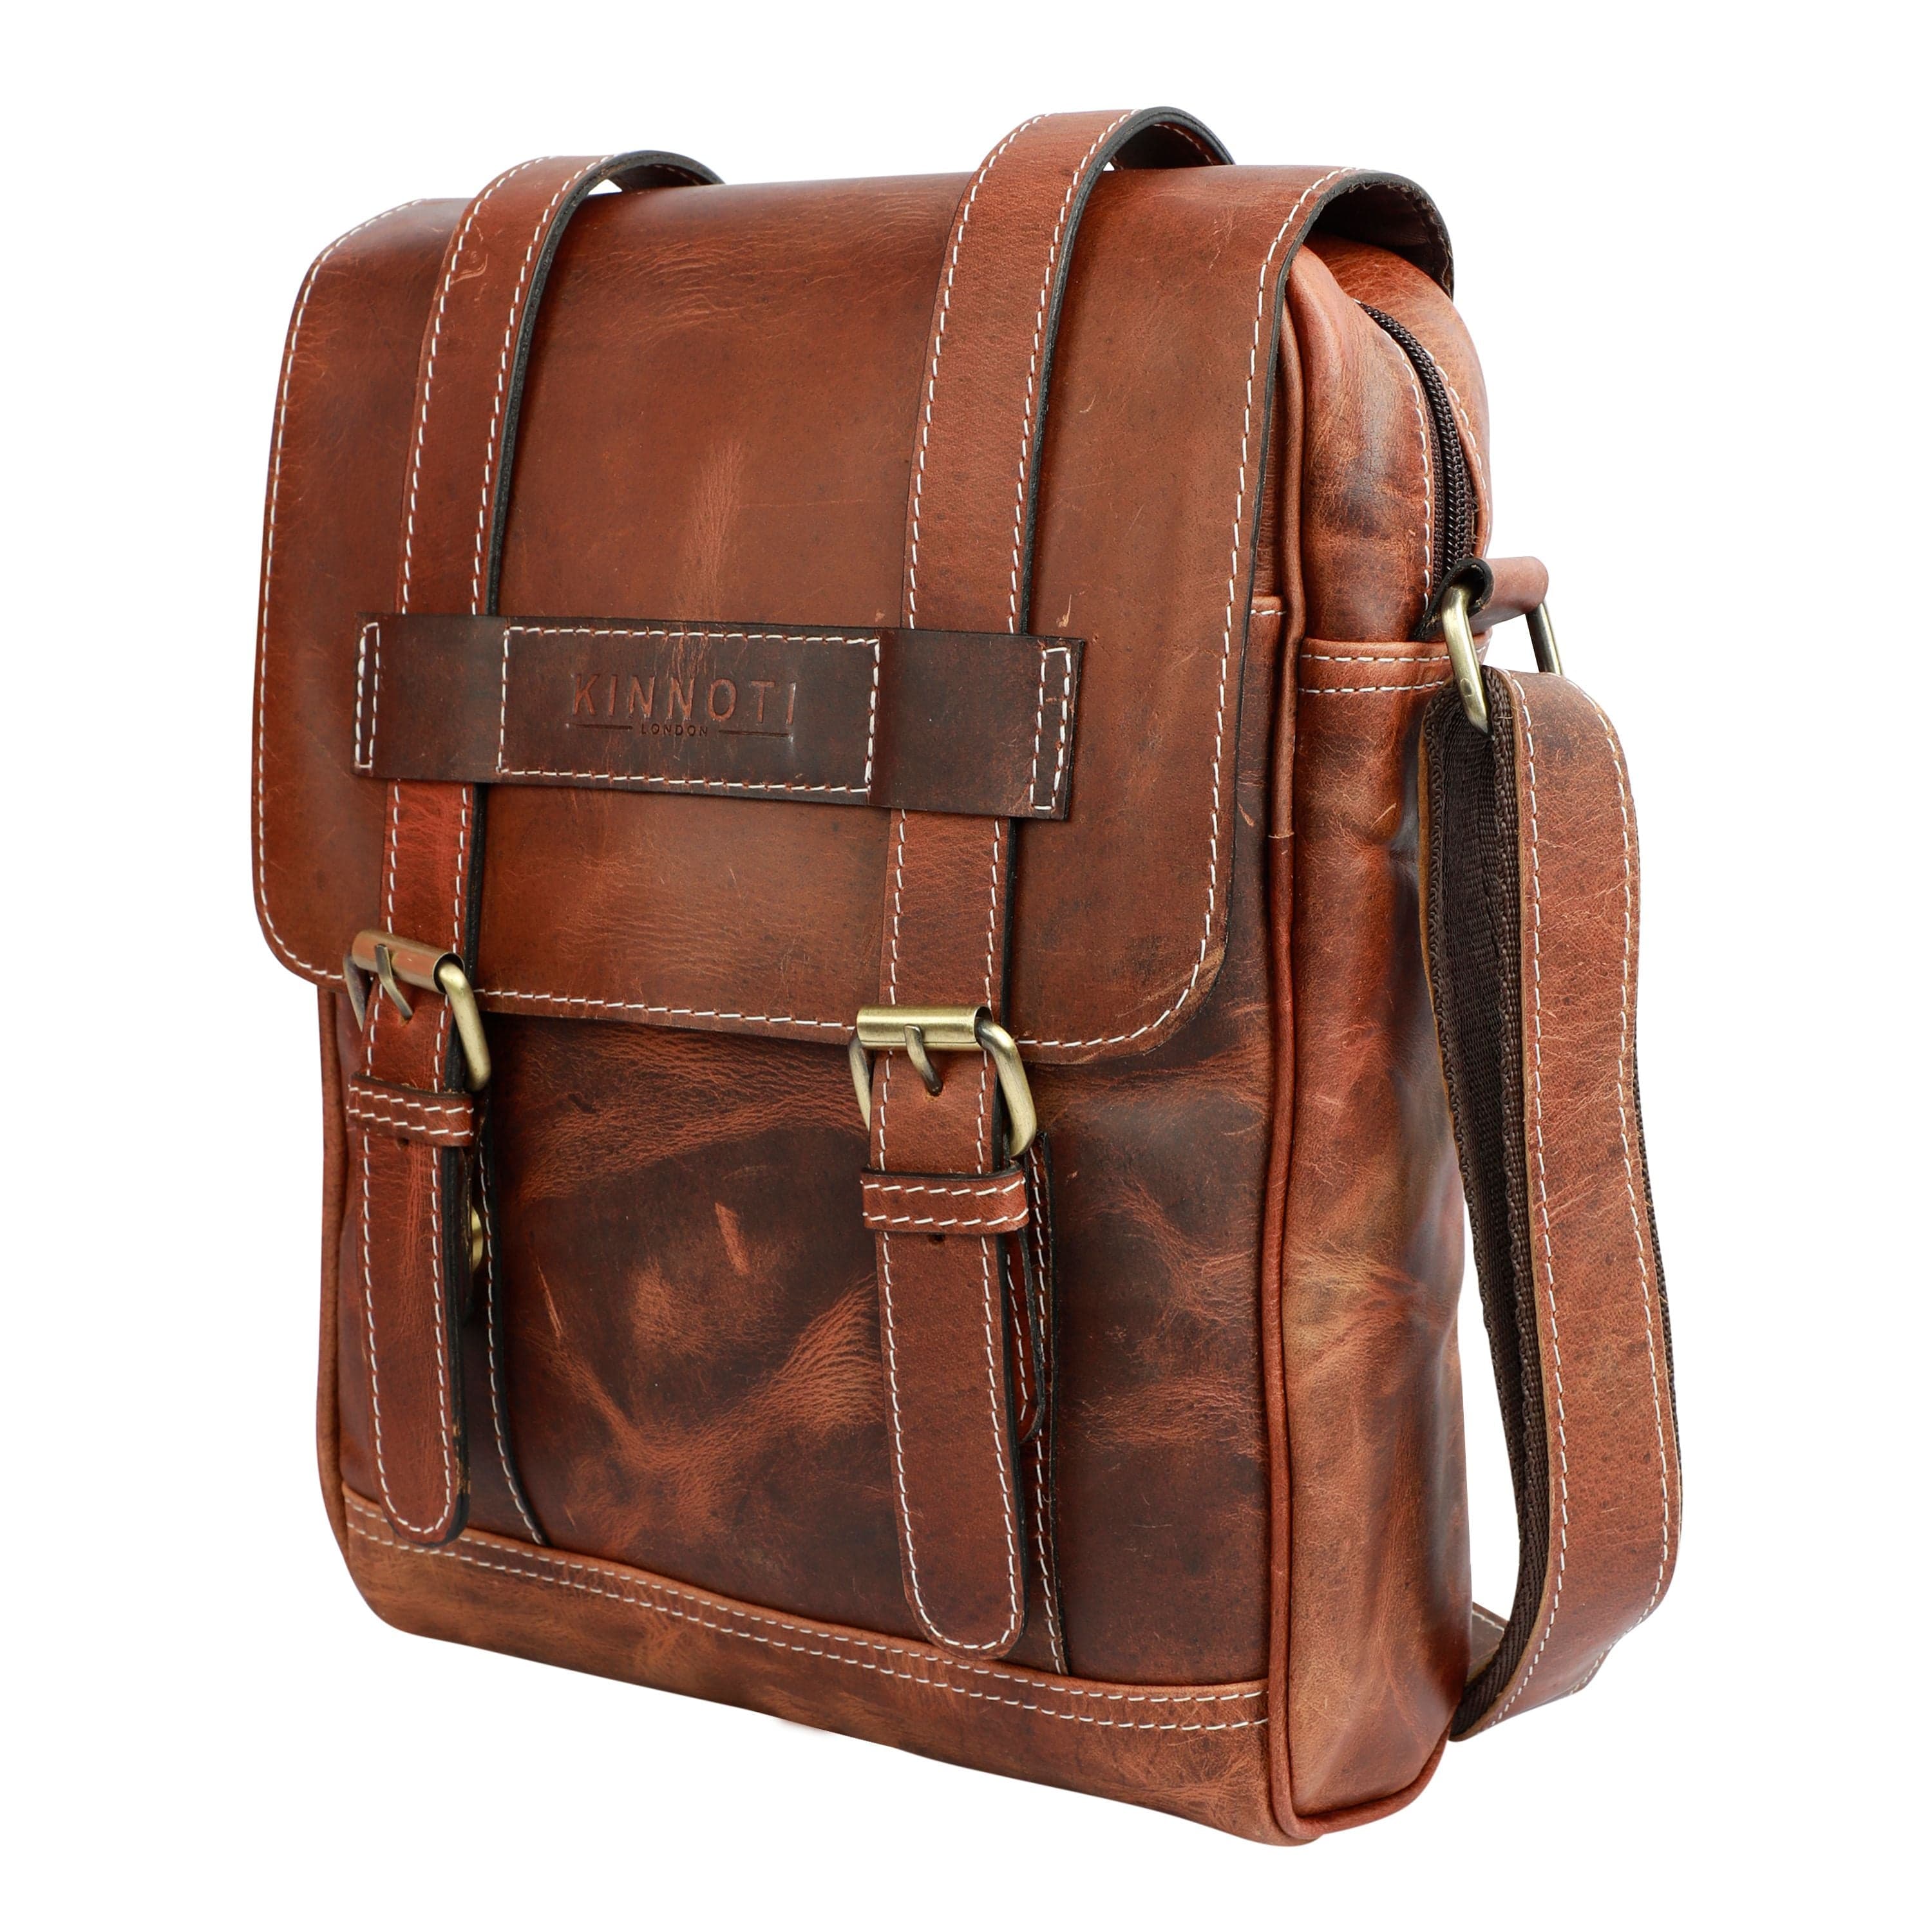 Kinnoti Stanford Genuine Leather Messenger Bag